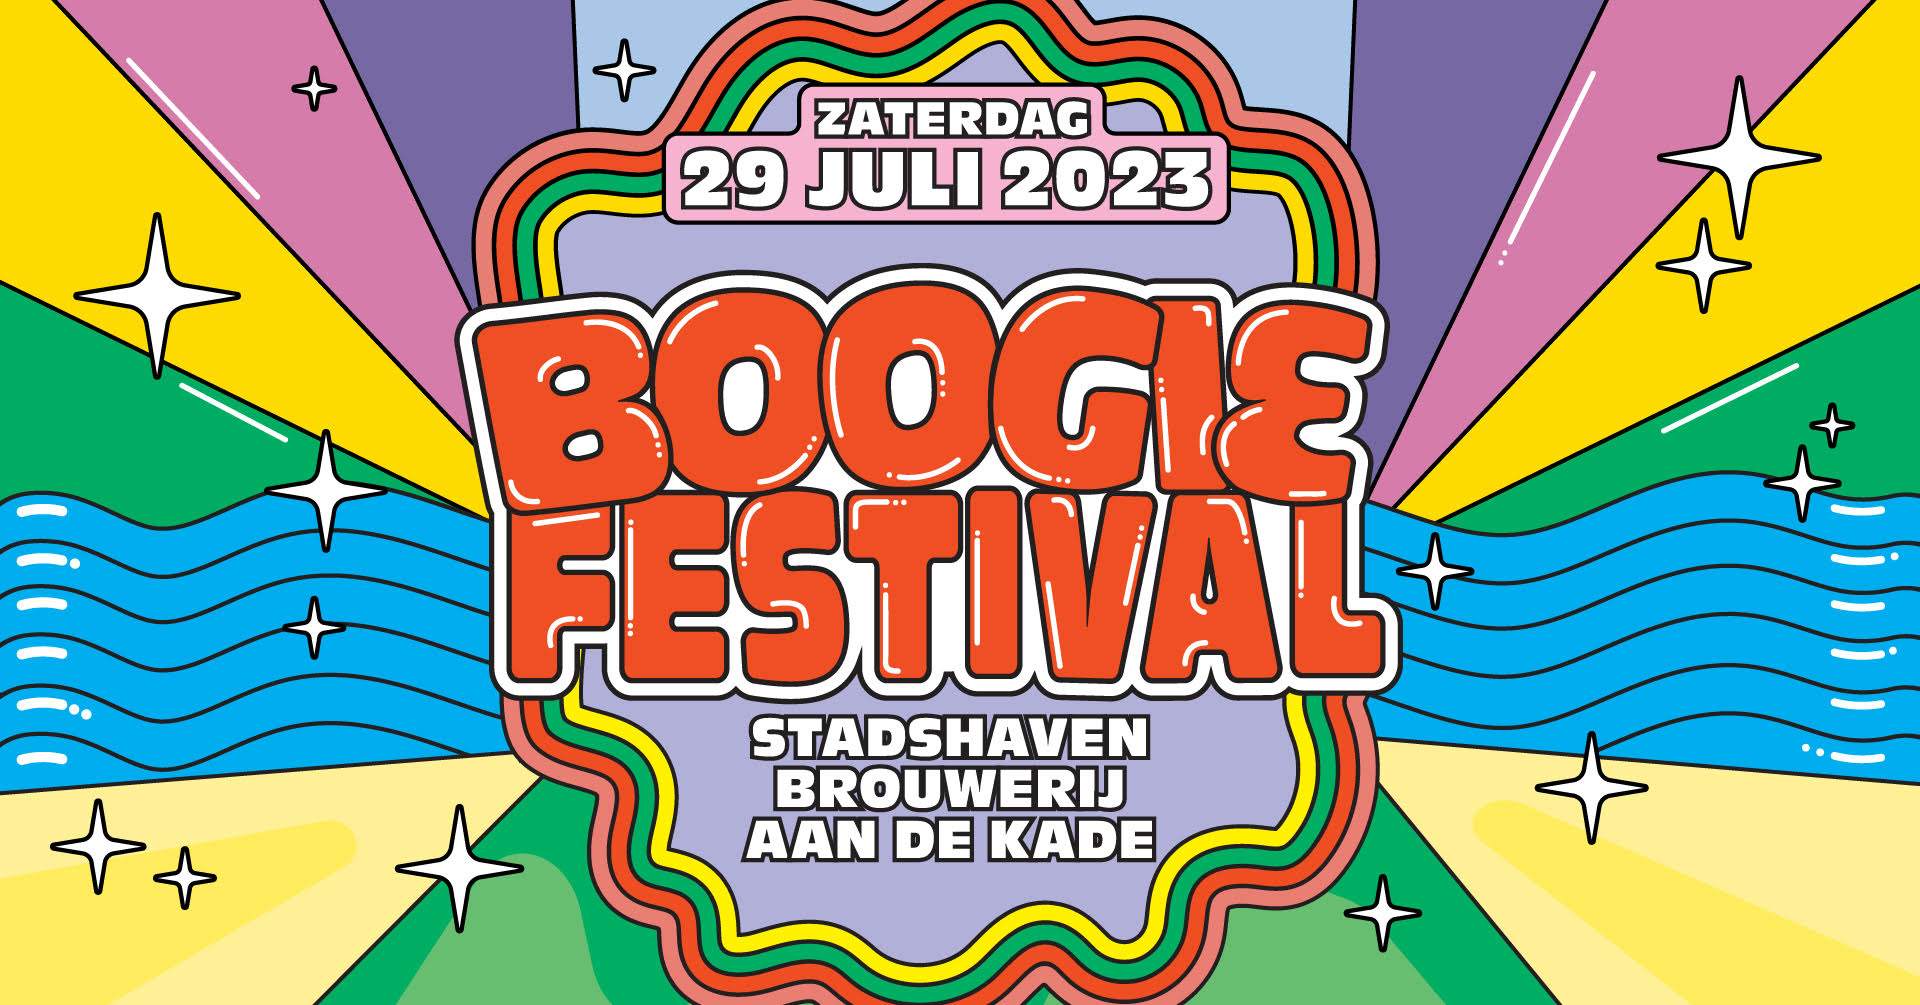 Boogie Festival - フライヤー表